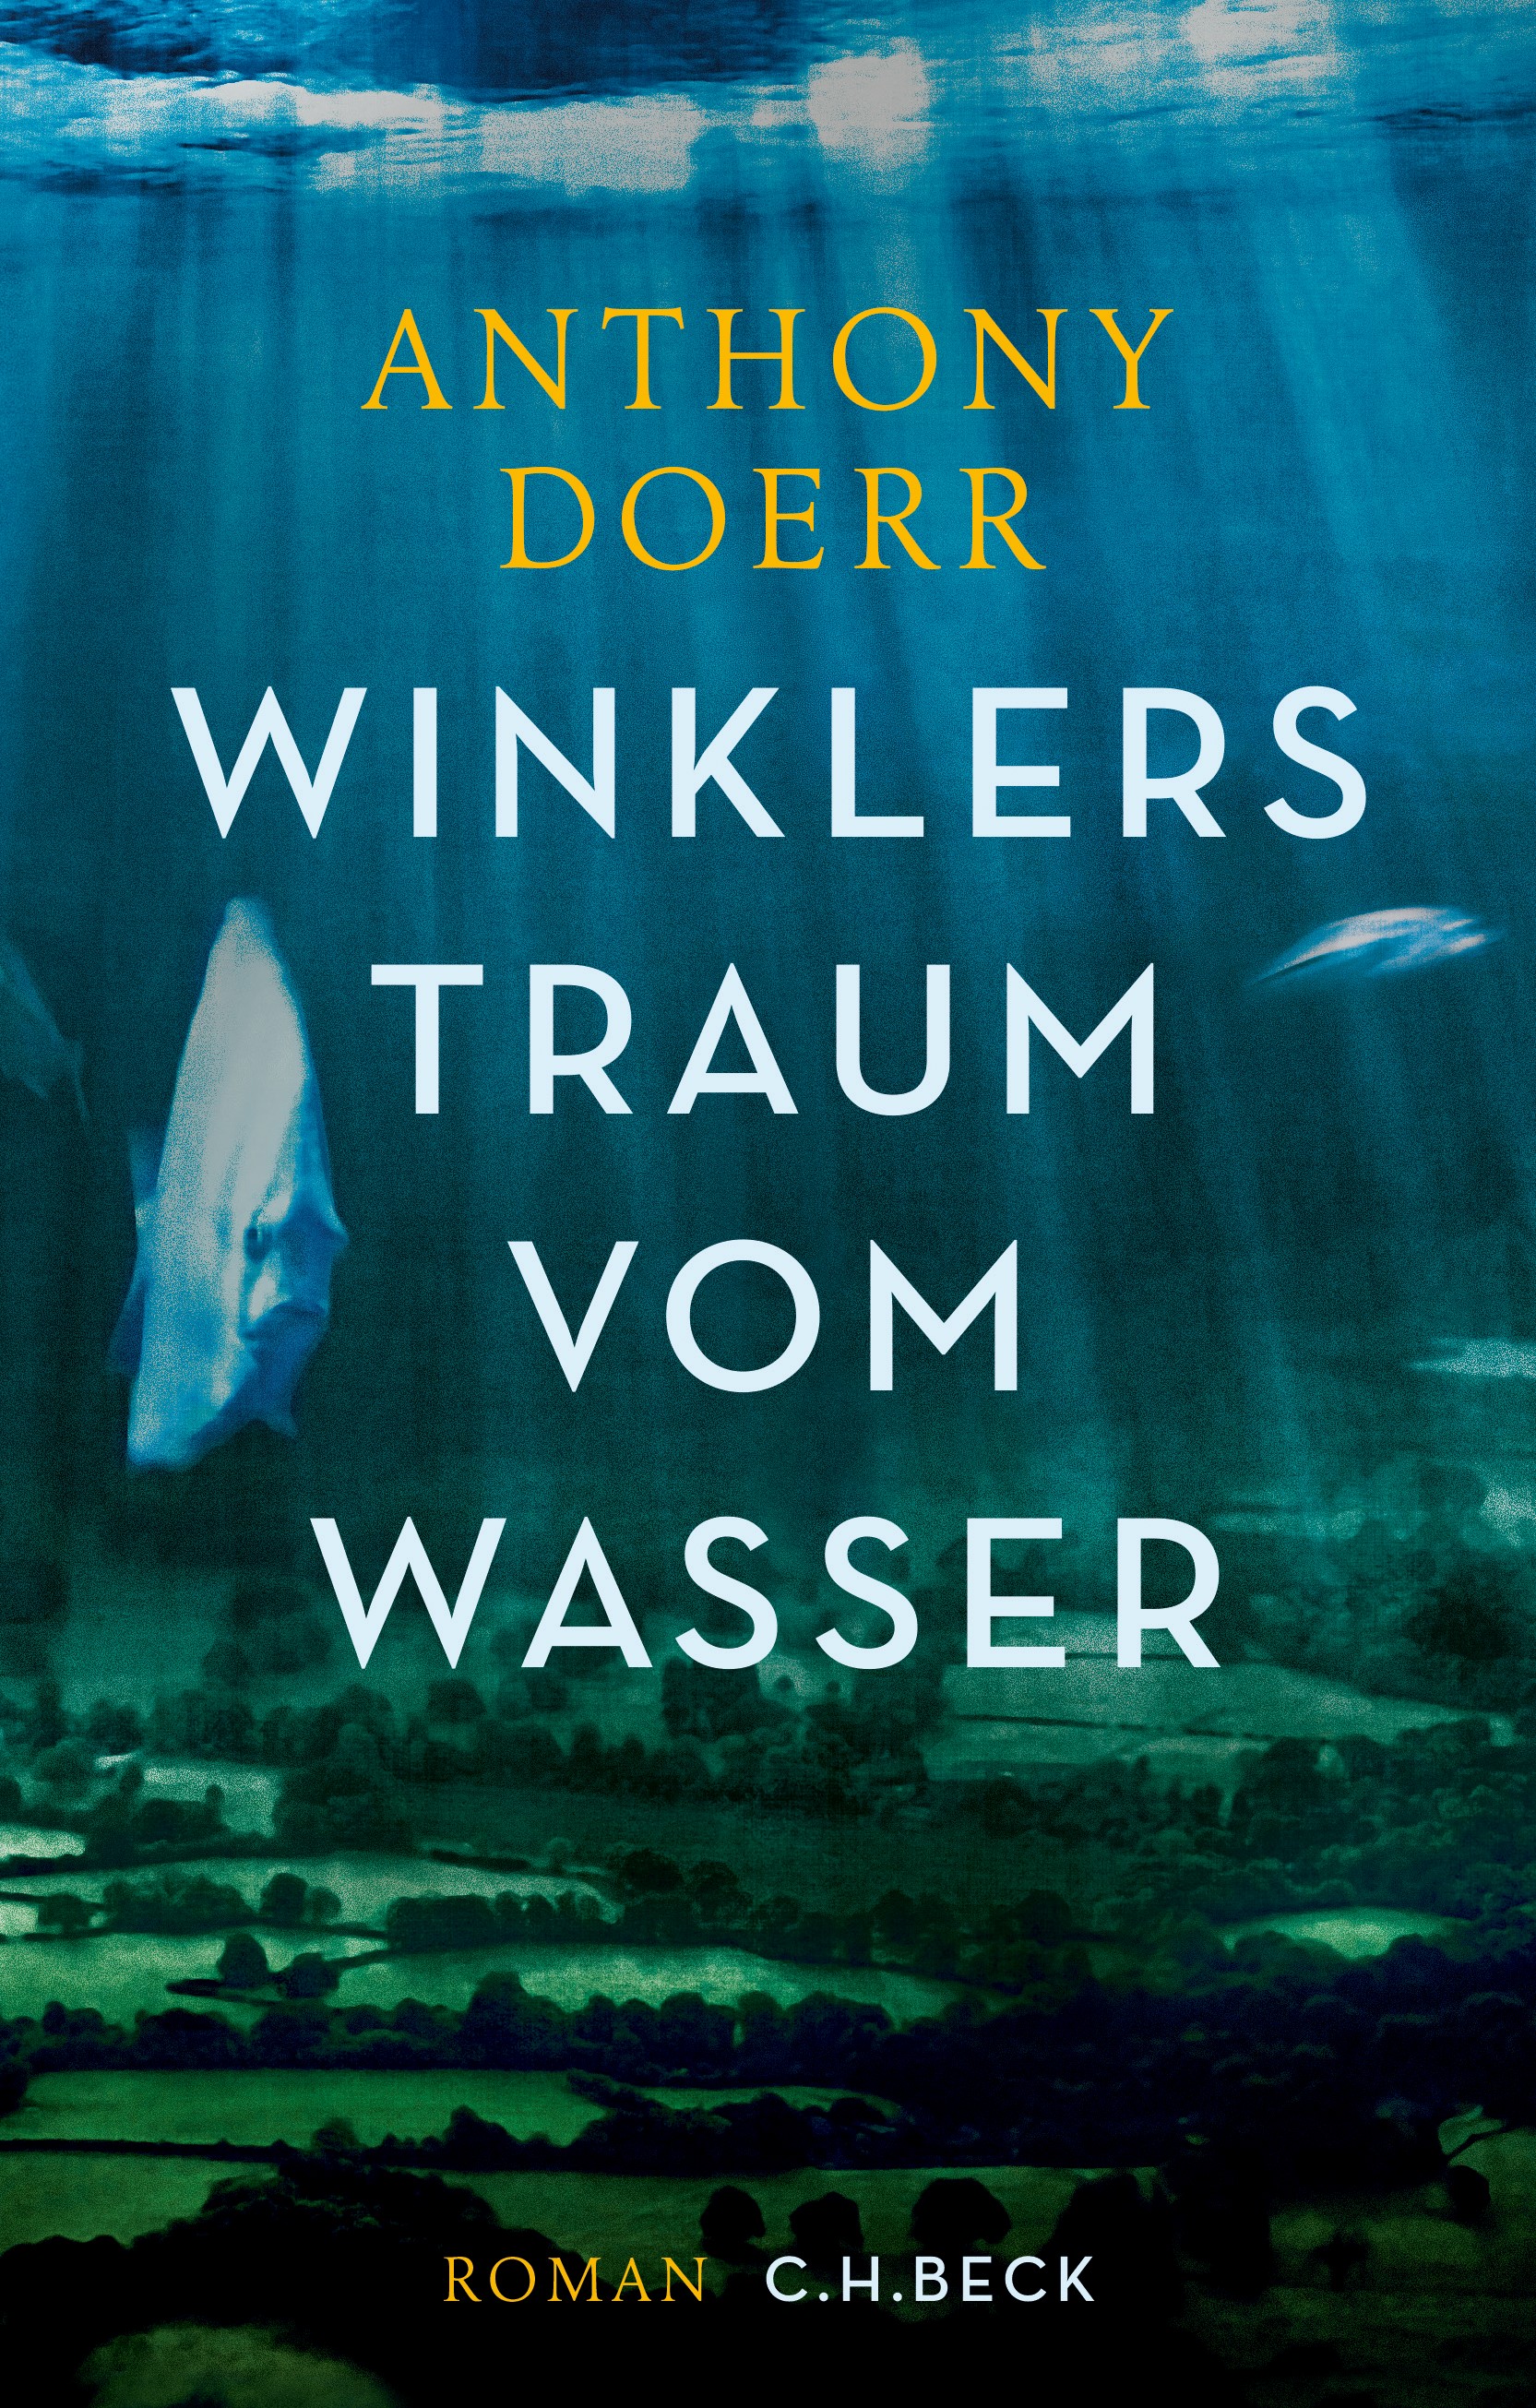 Cover: Doerr, Anthony, Winklers Traum vom Wasser